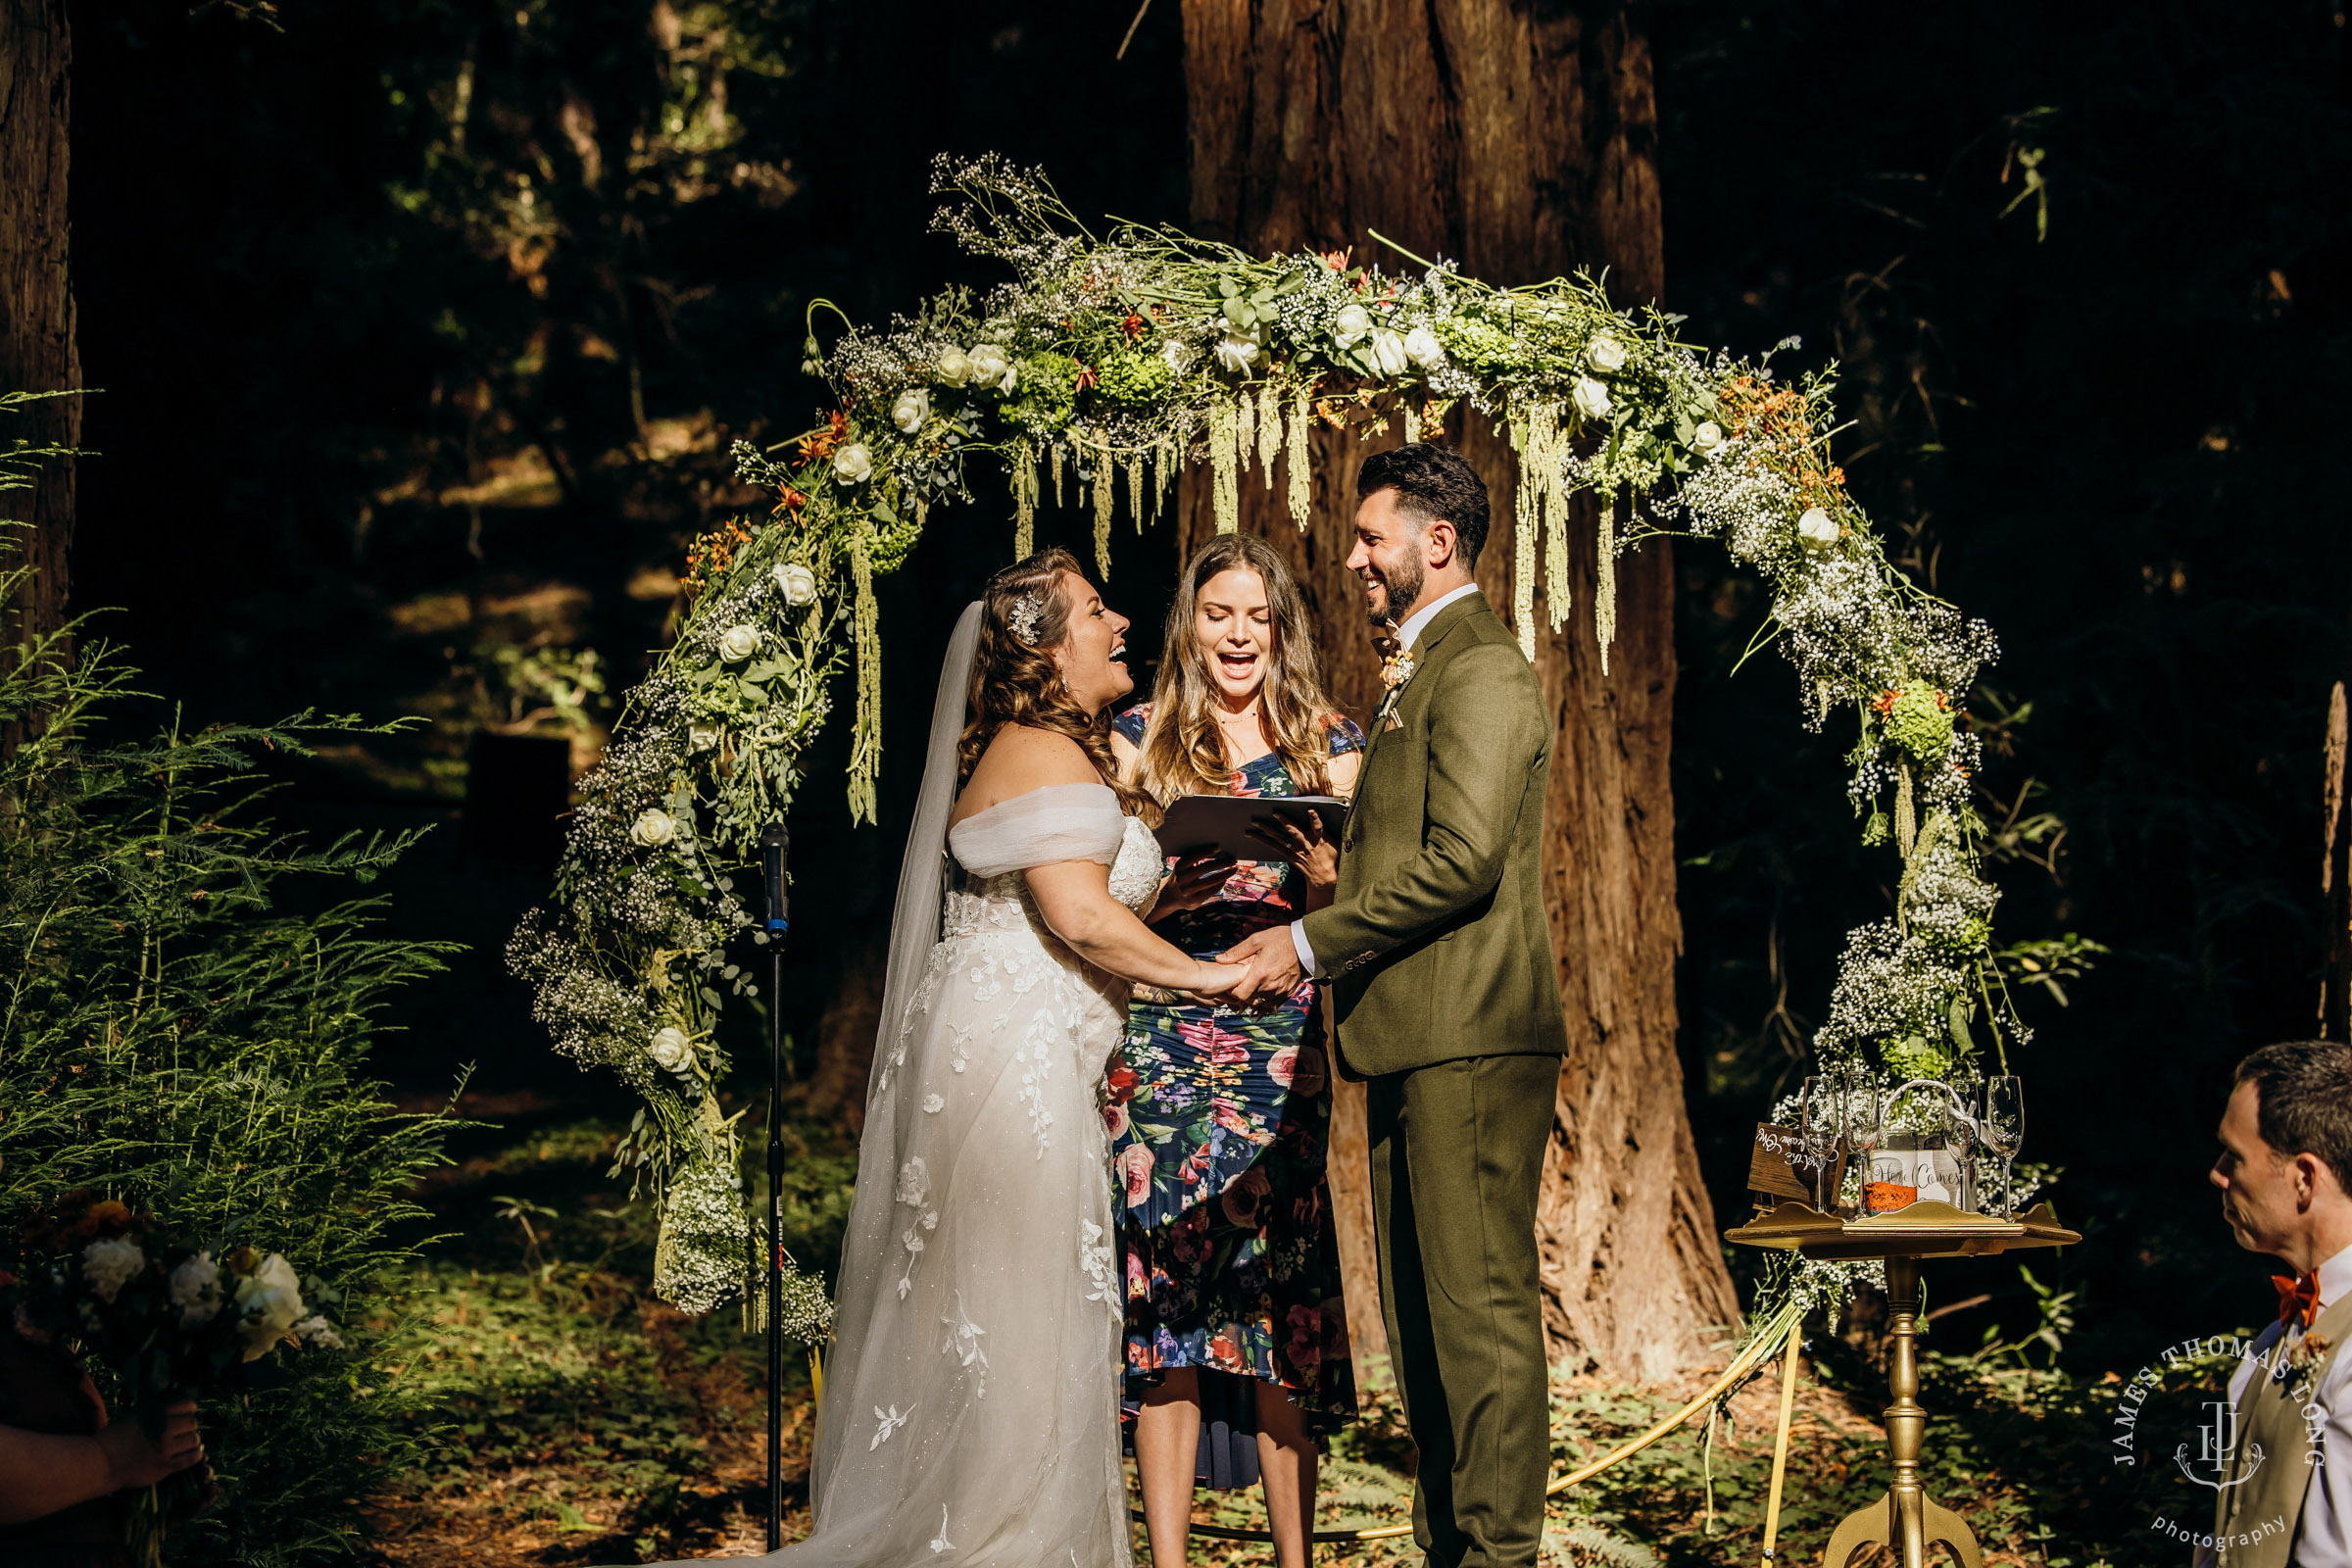 Destination wedding in the Santa Cruz Mountain Redwoods by Seattle destination wedding photographer James Thomas Long Photography